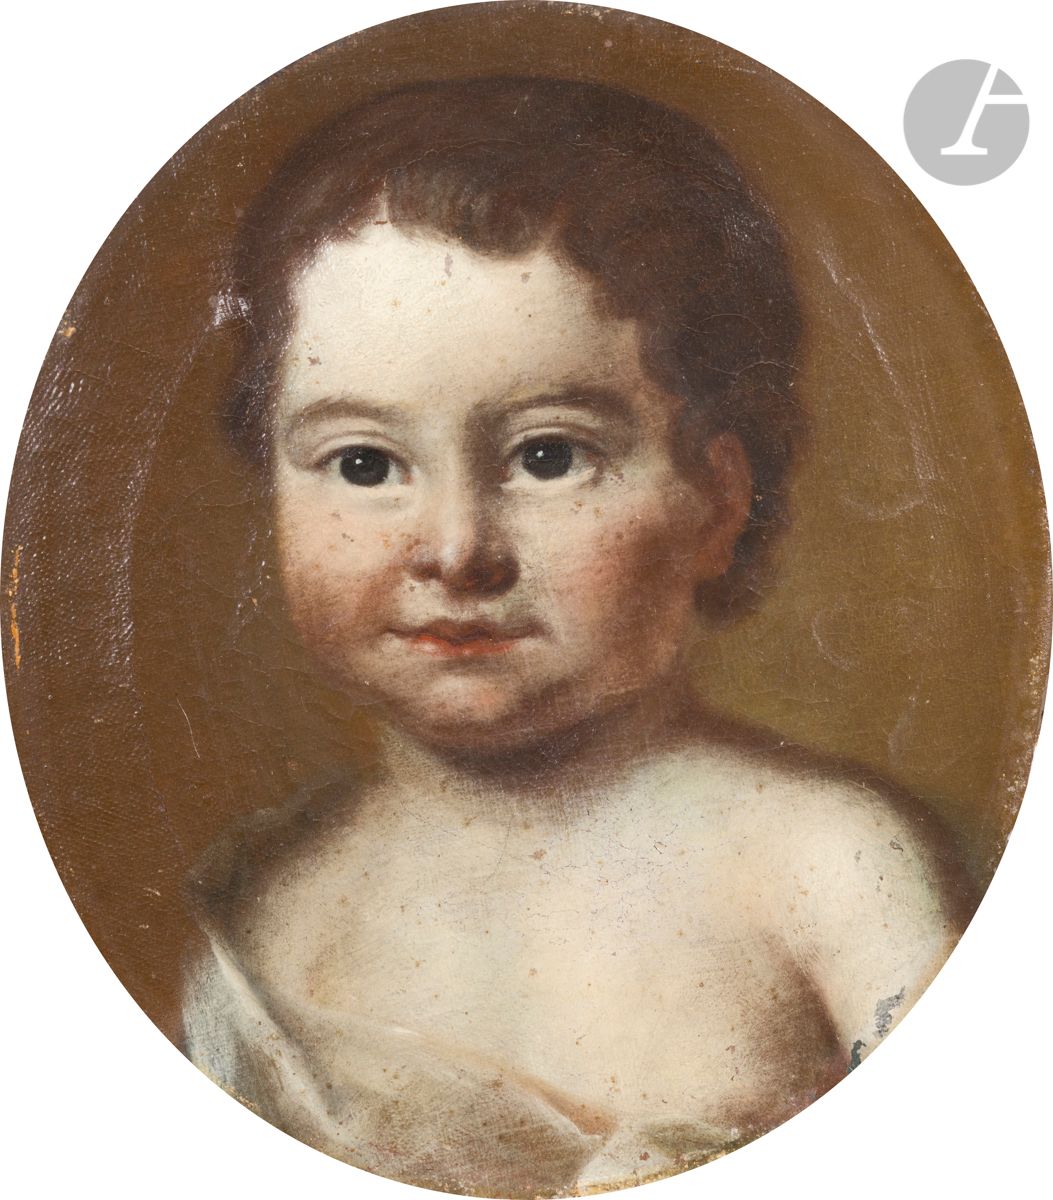 Null 法国学校 约1800年
一个孩子的肖像。
原创椭圆形帆布
30 x 25,5 cm